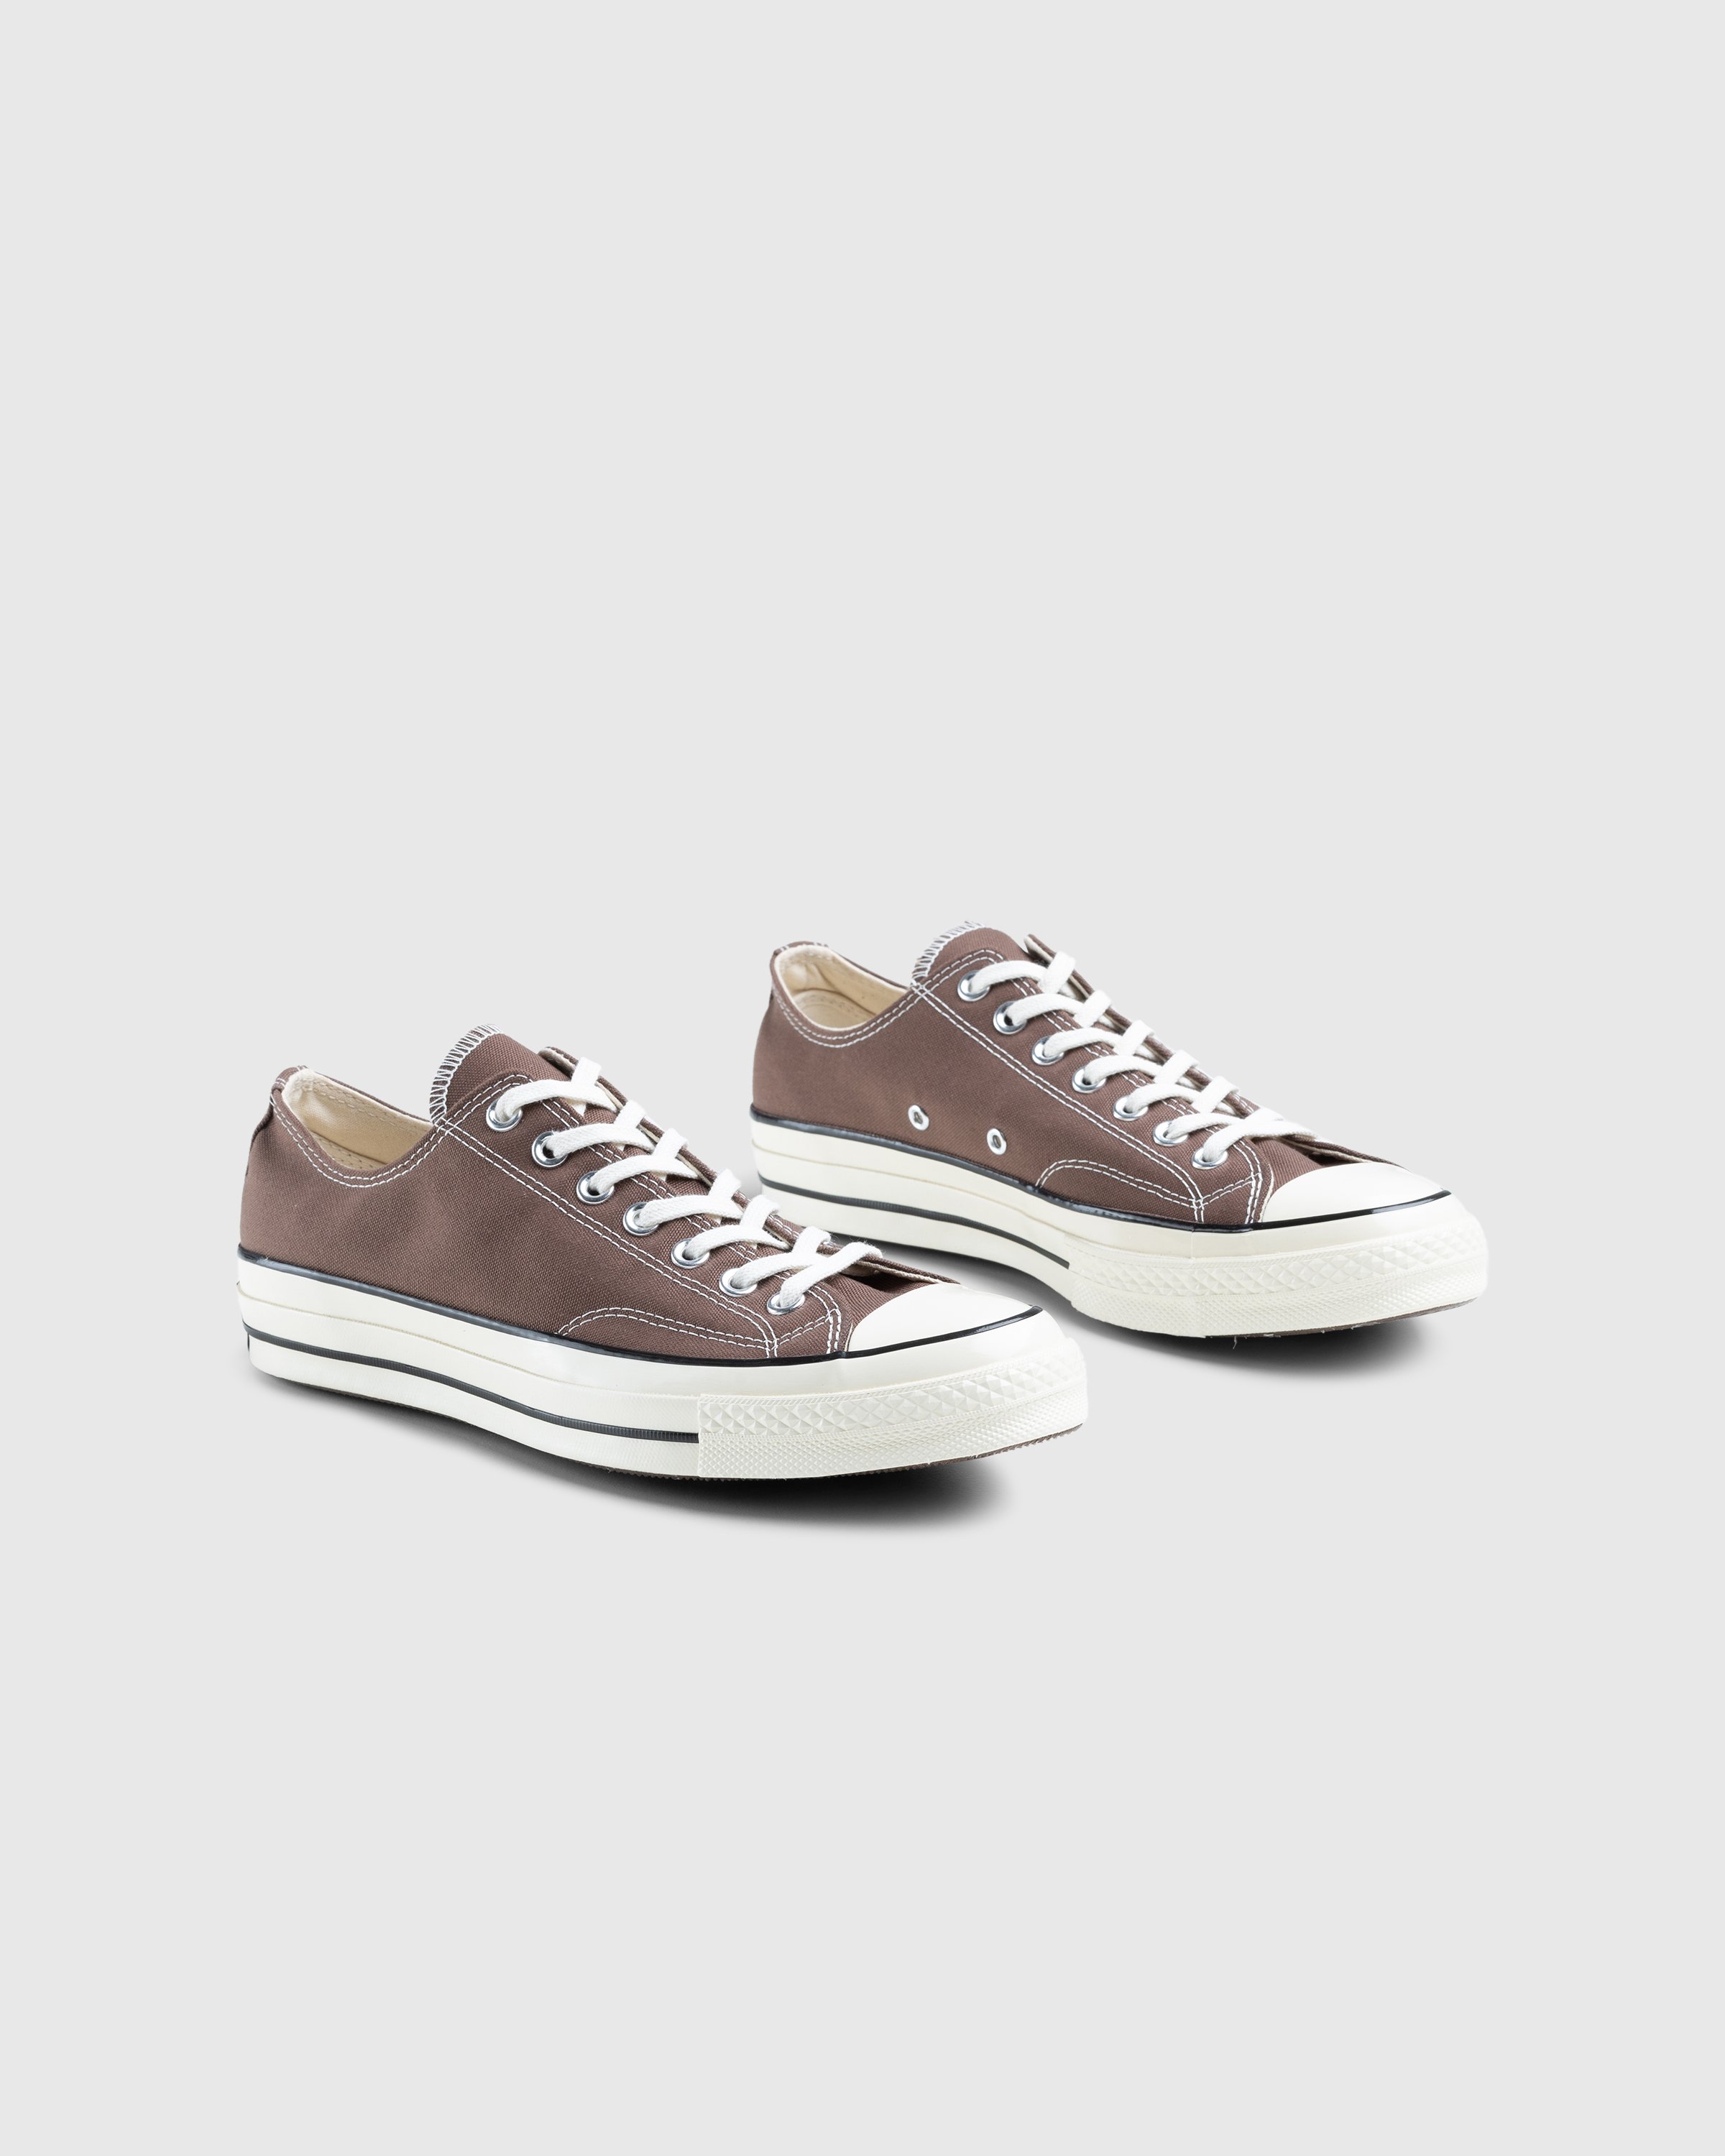 Converse - Chuck 70 Ox Squirrel Friend/Egret/Black - Footwear - Brown - Image 3